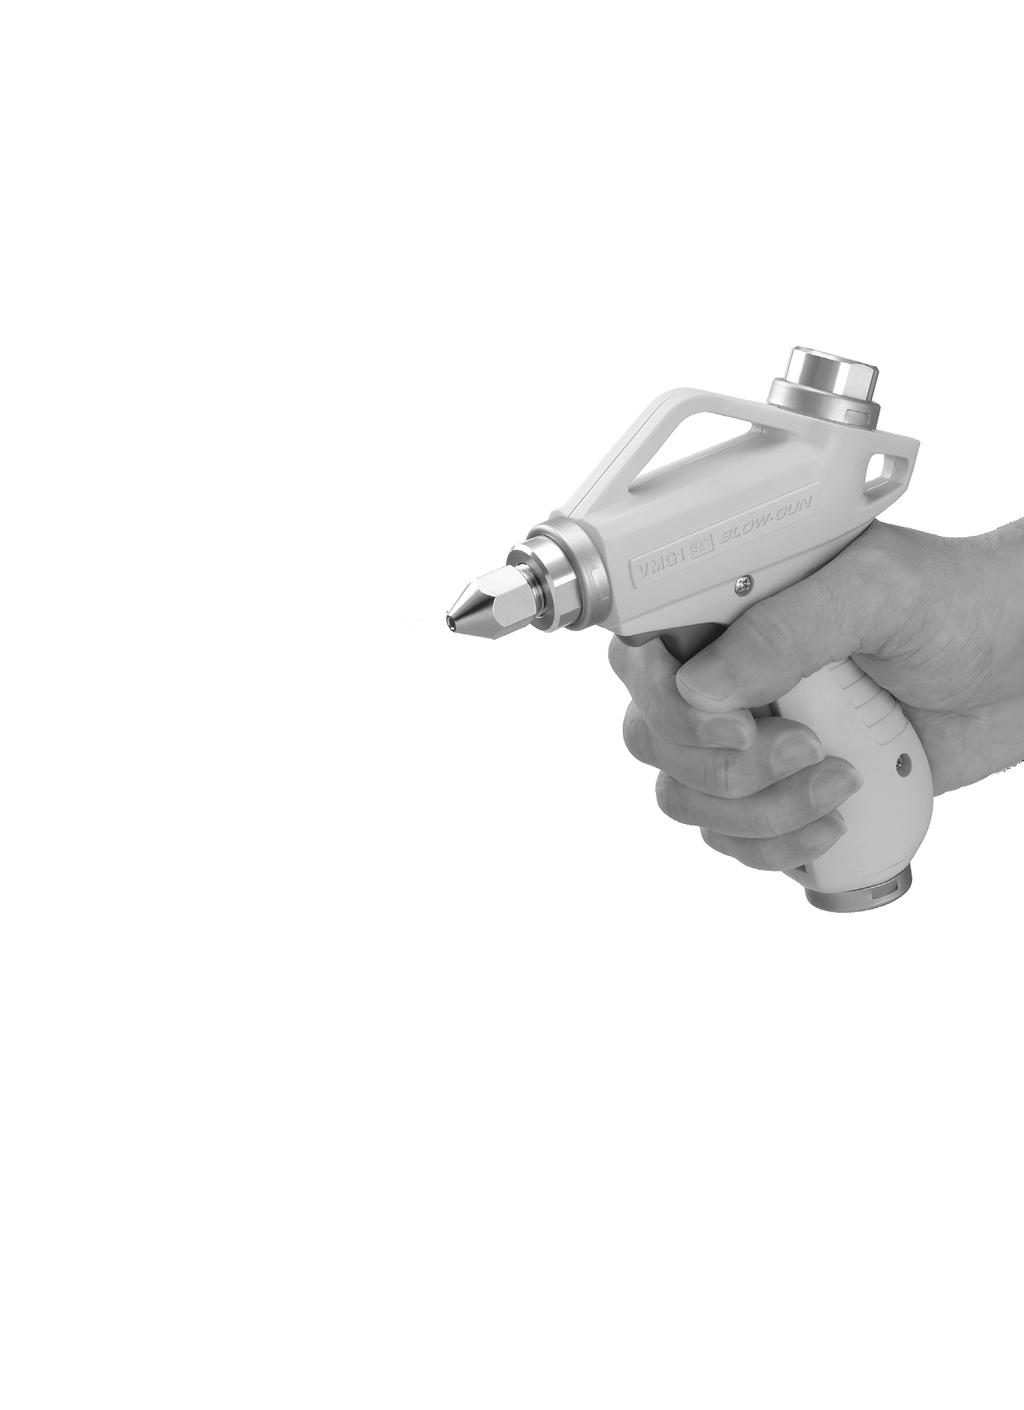 Sopro de ar 56% Sopro de ar 70% SMC Modelo existente Pistola de ar + engate rápido + tubo espiral